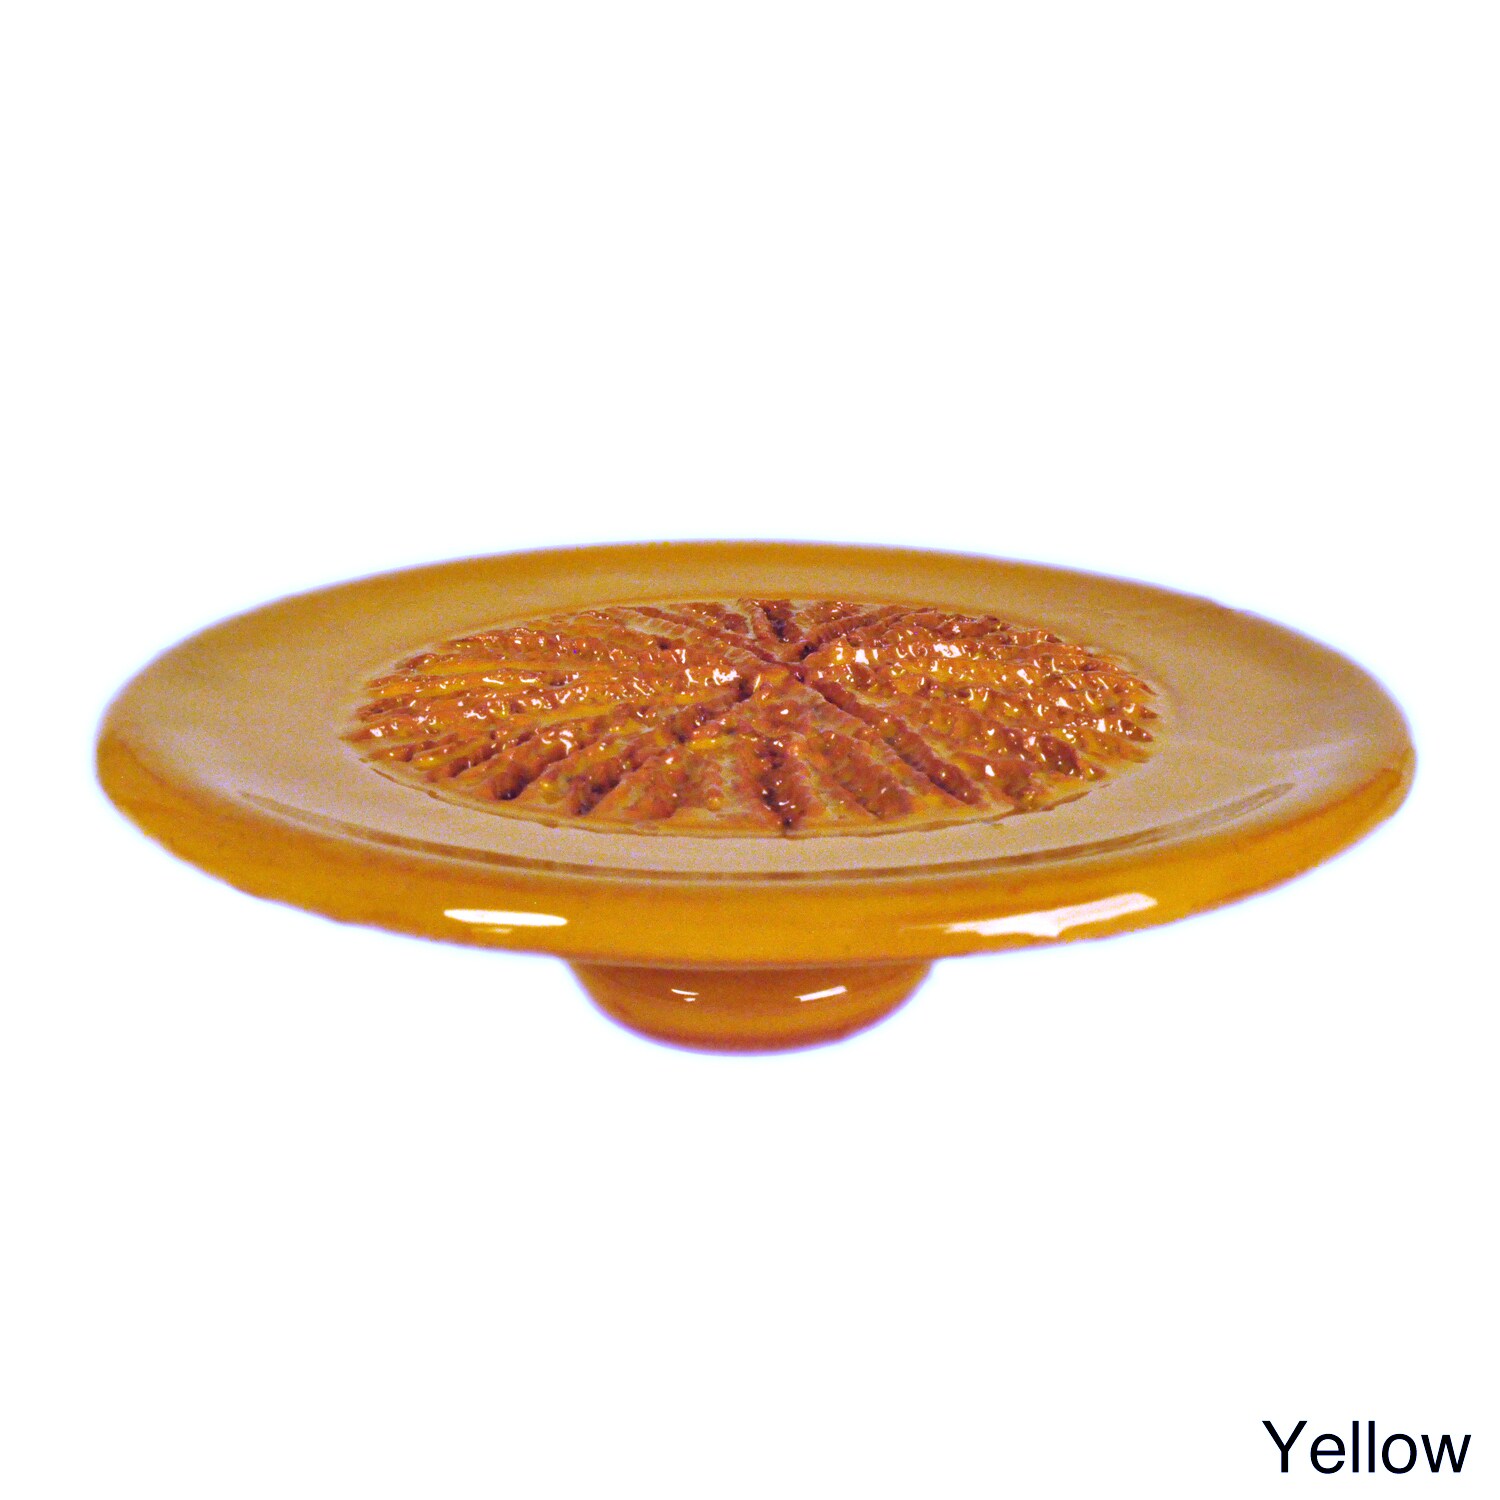 https://ak1.ostkcdn.com/images/products/7873173/Yellow-Terafeu-Hand-Made-Pottery-Red-Garlic-Grater-794b9a89-1e3b-42fe-83ae-4c15e1a3e76d.jpg